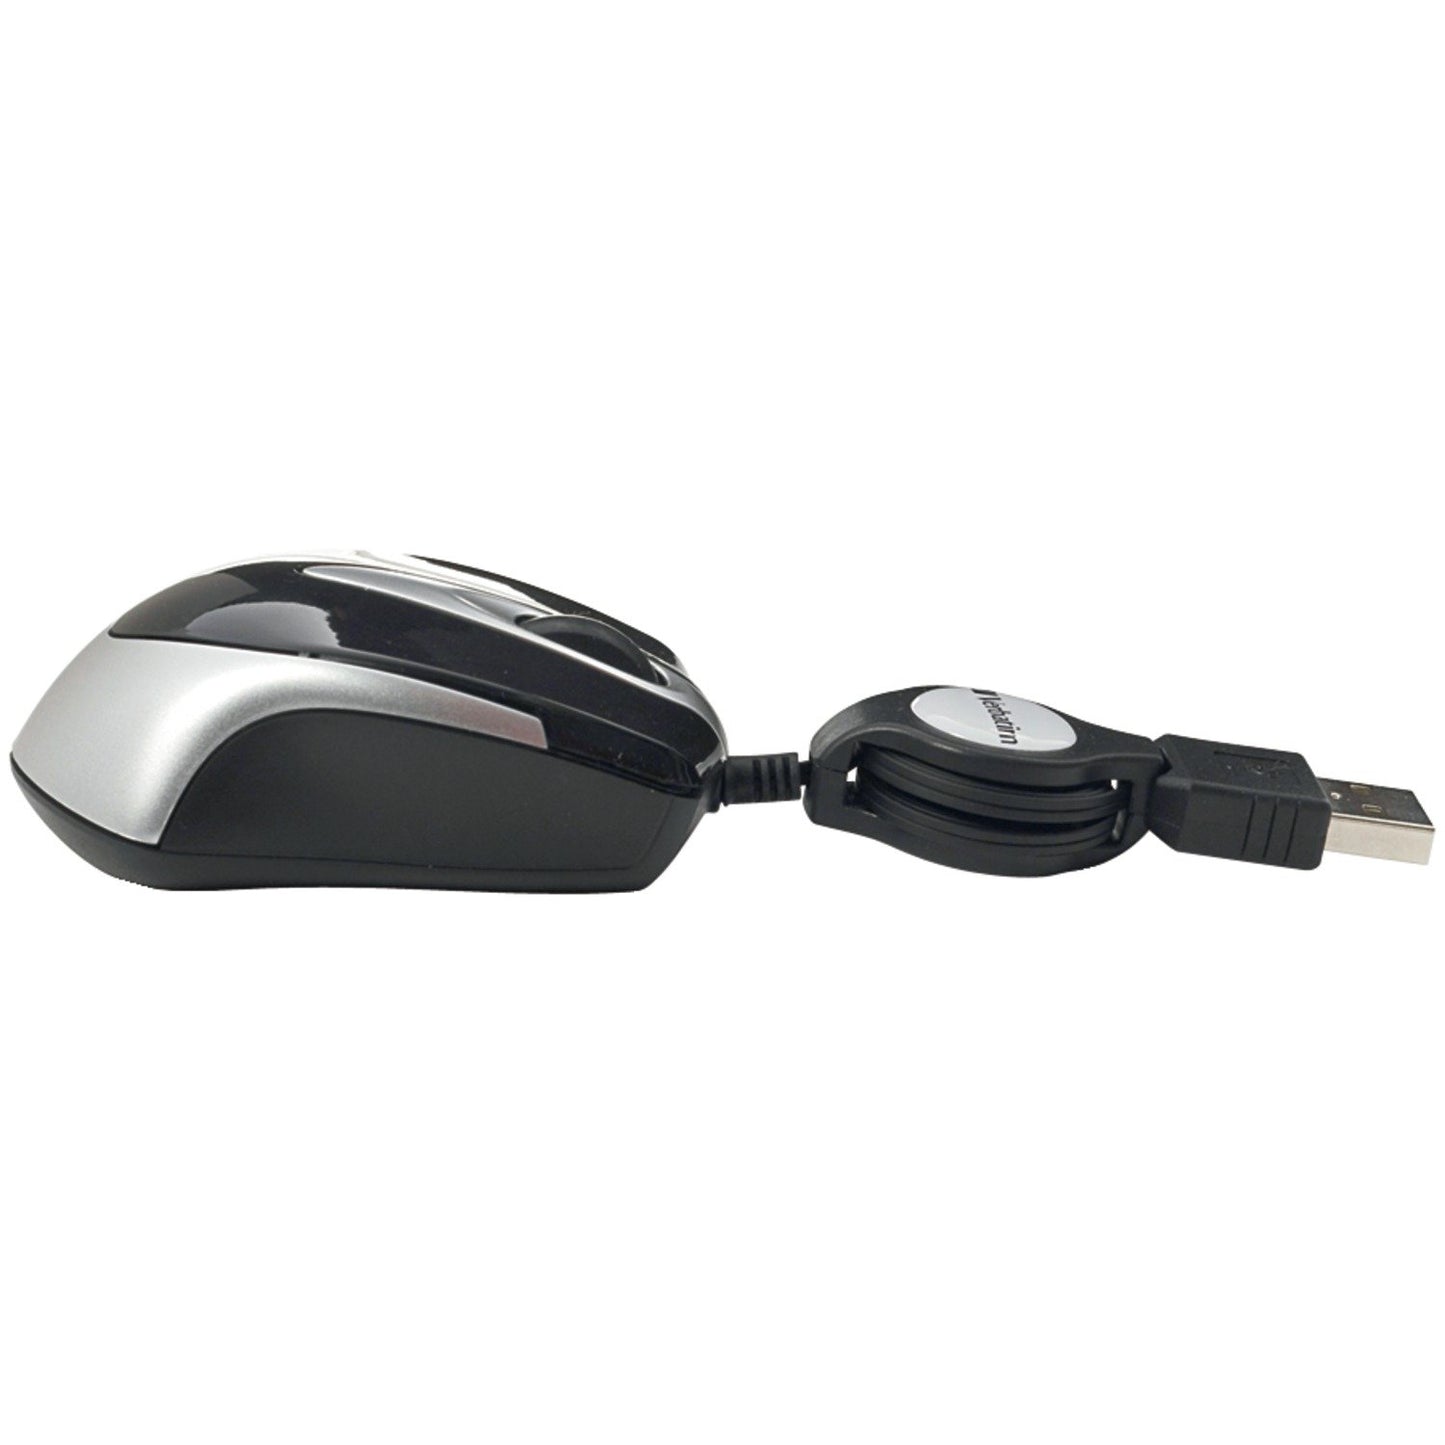 Verbatim 97256 Optical Mini Travel Mouse (Black)